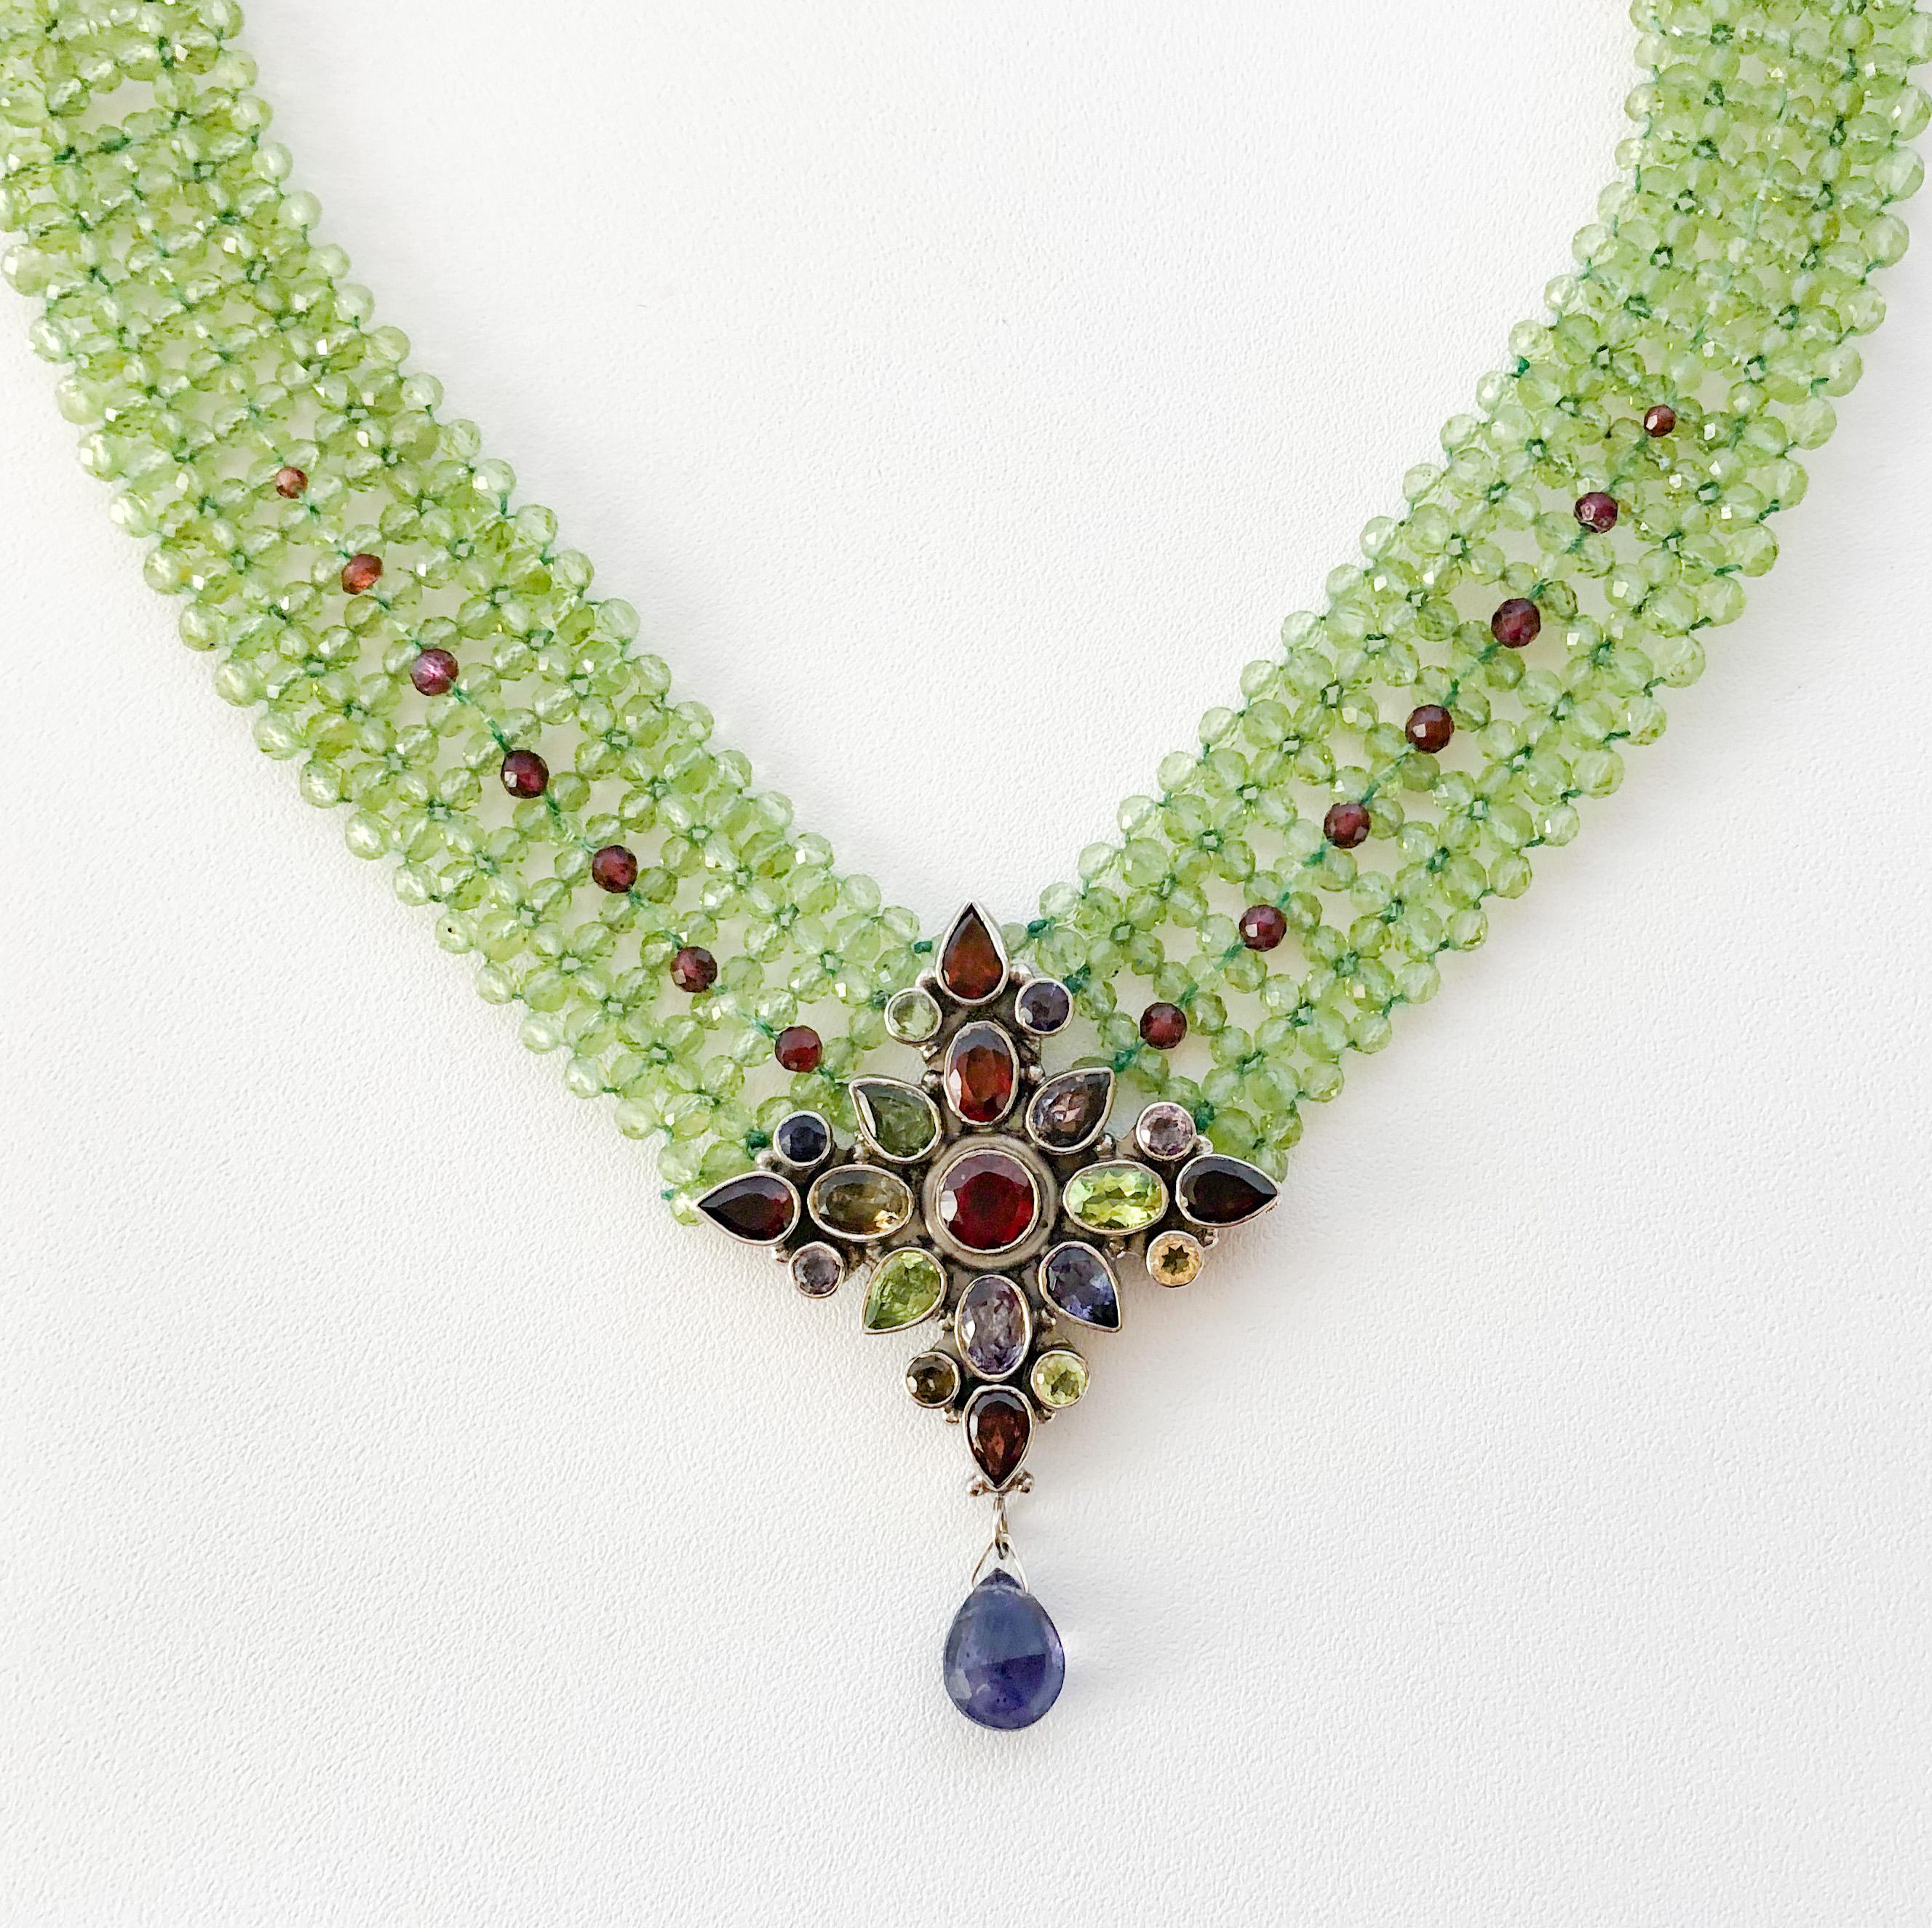 Marina J. Stunning Woven Peridot and Garnet Necklace & Multicolored Centerpiece 1